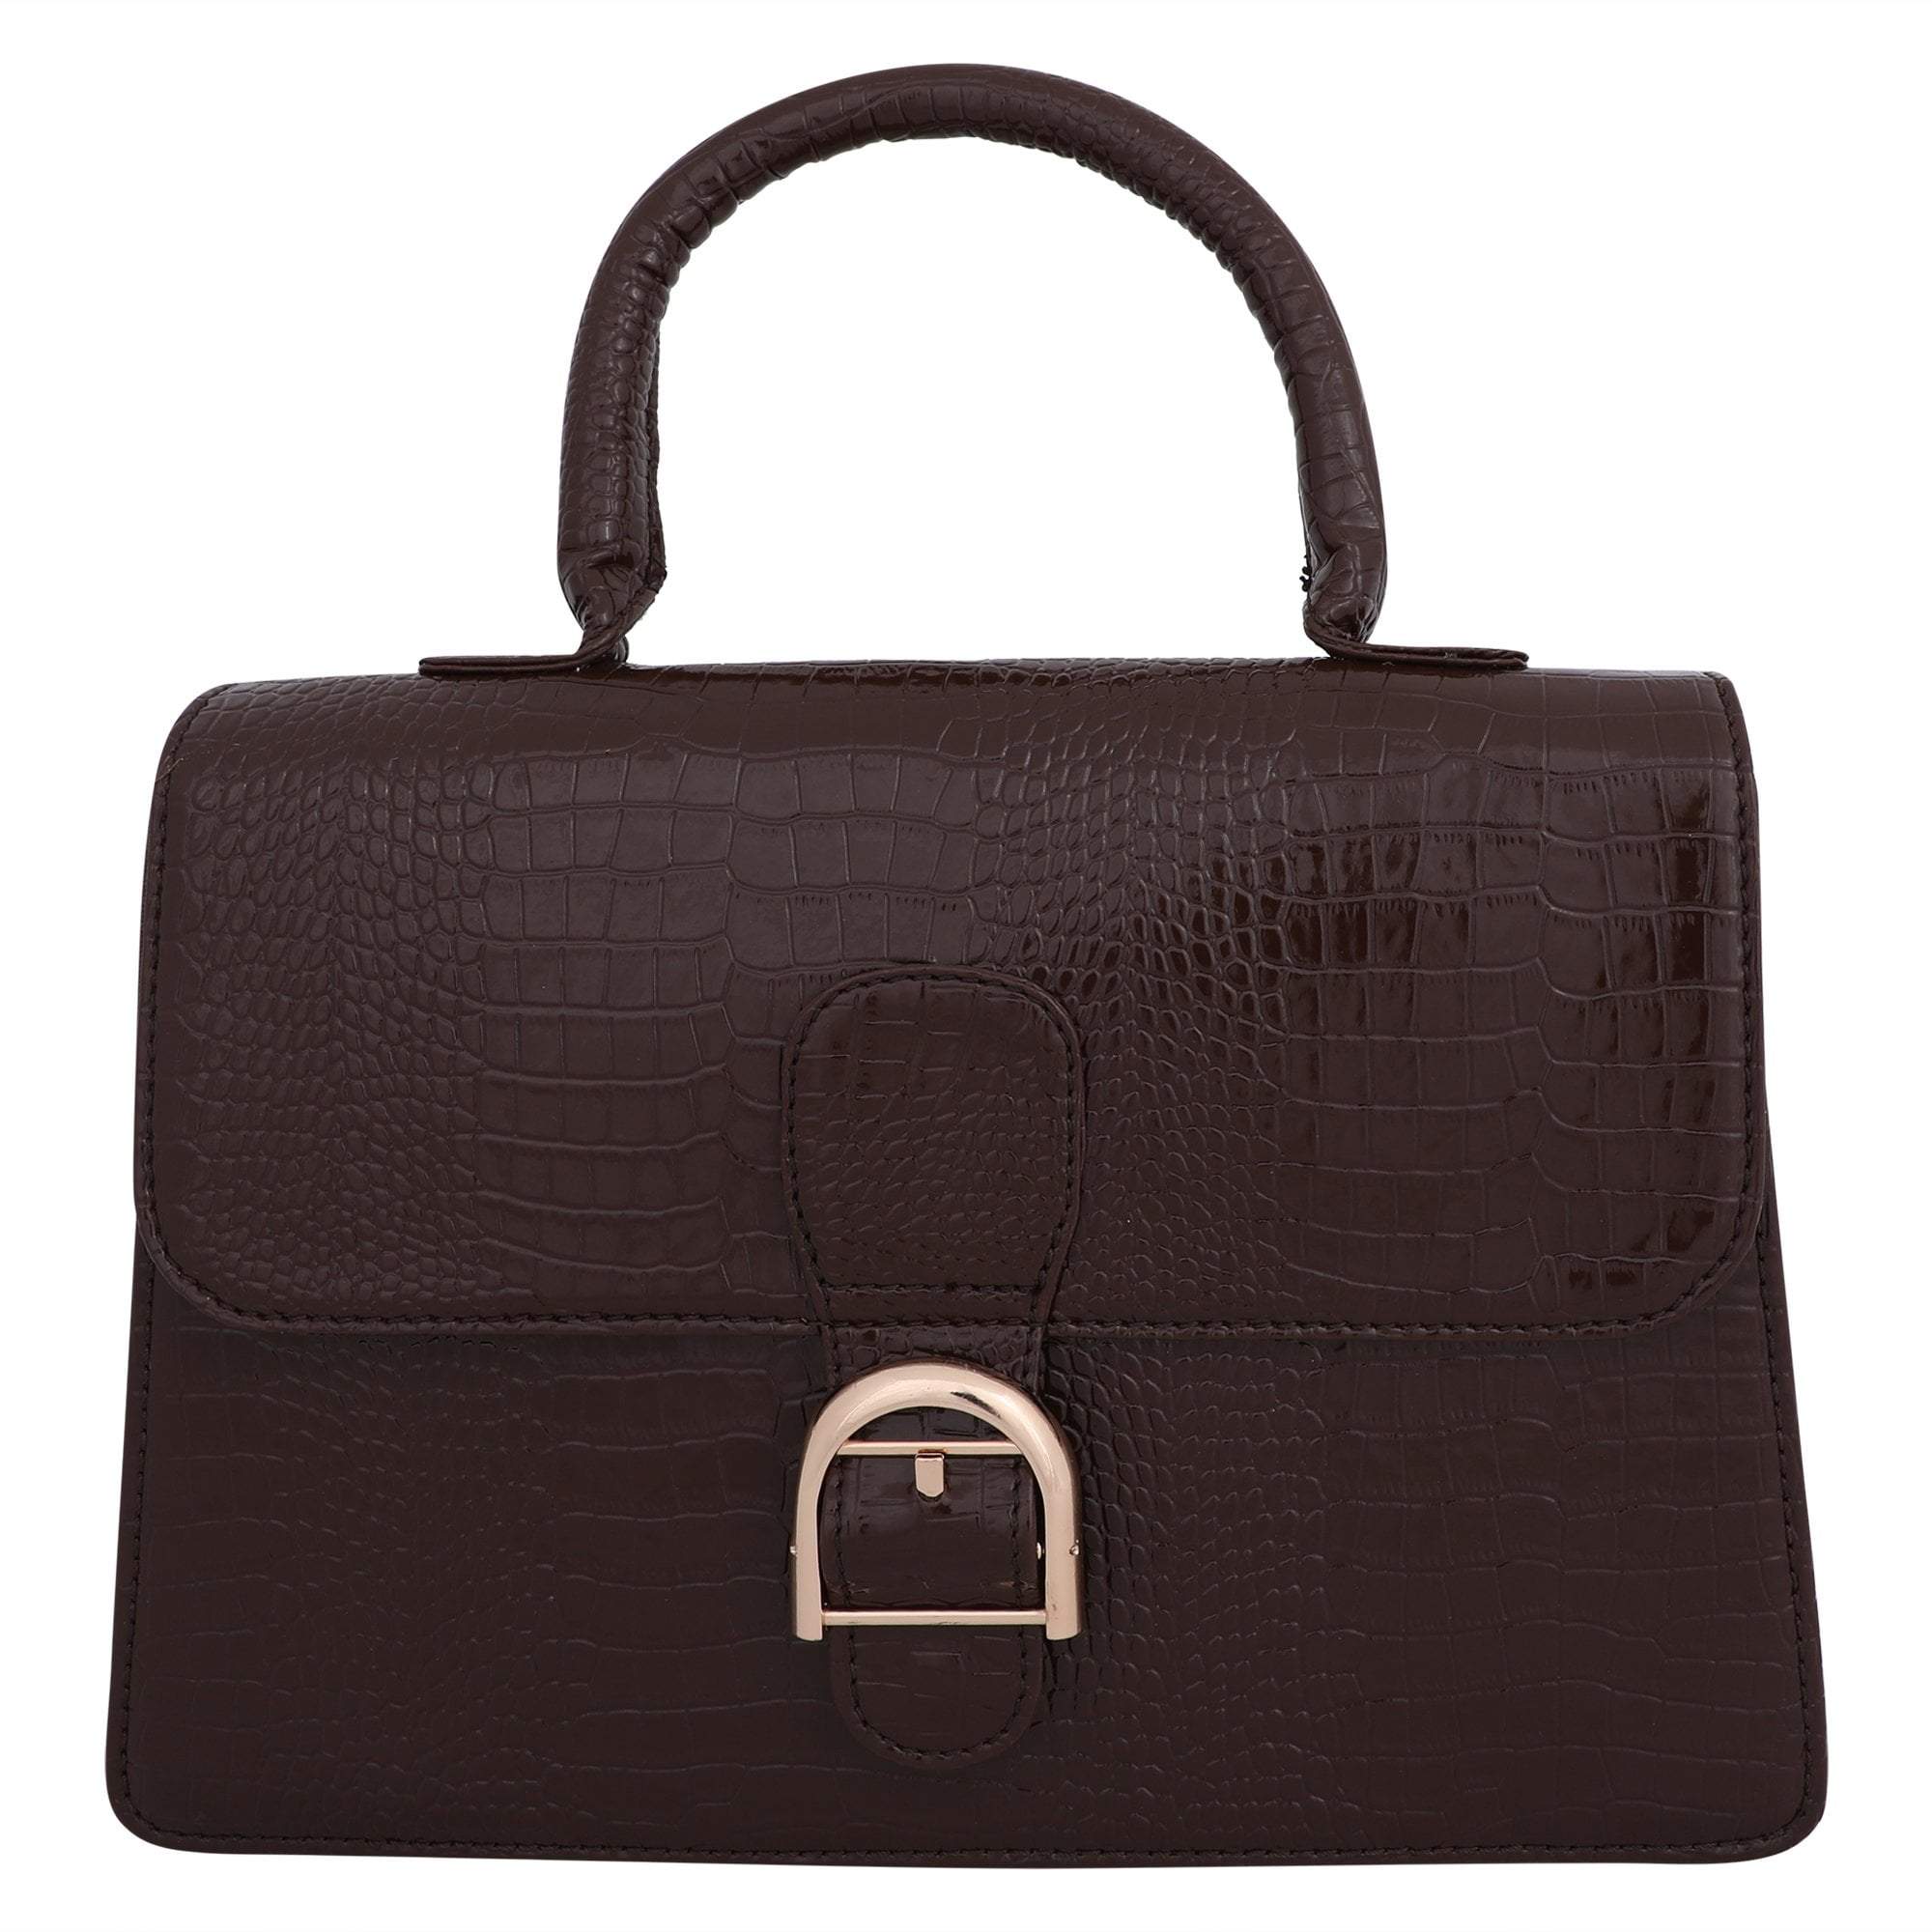 kinnoti Handbags Brown Vegan Croco Leather Satchel Handbag